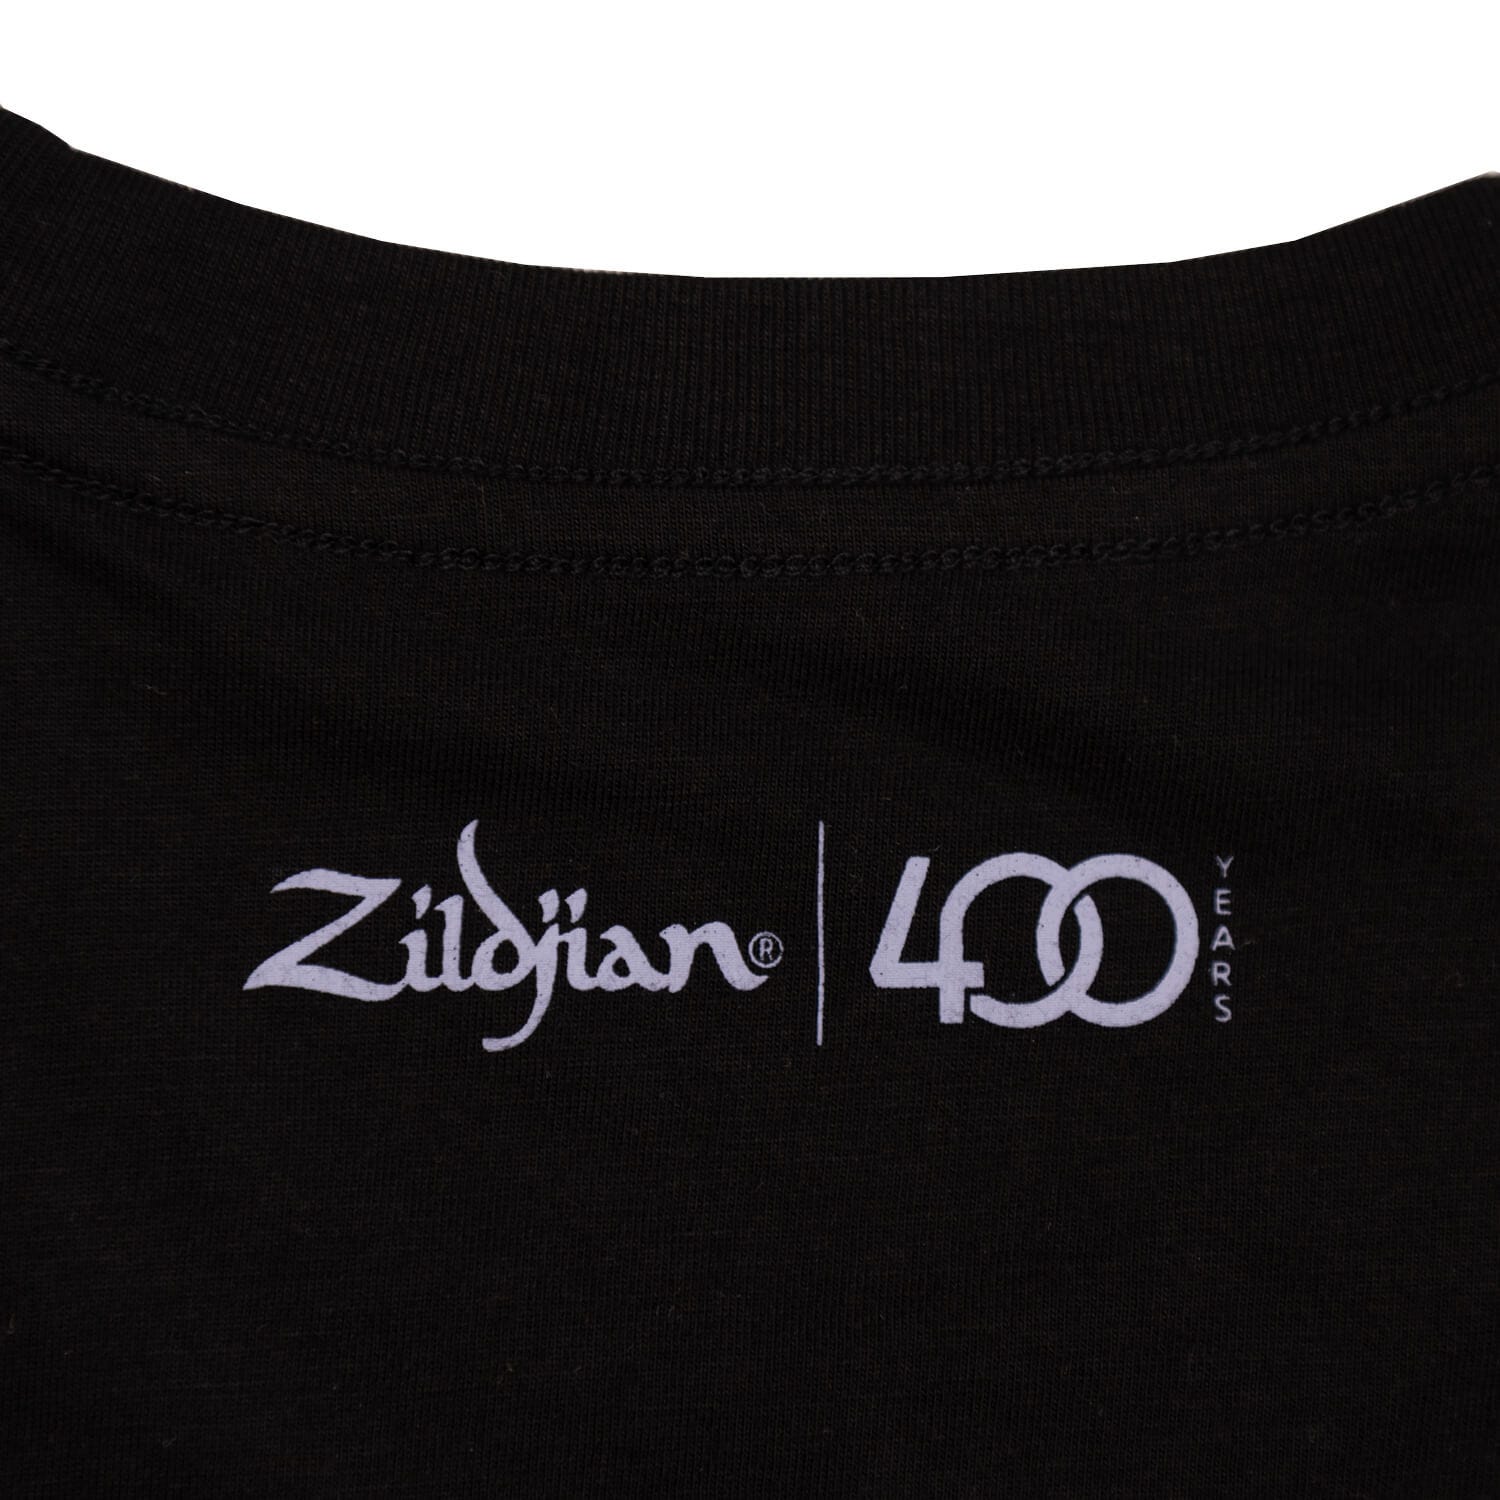 Zildjian Limited Edition 400th Anniversary Alchemy Tee Back Decal